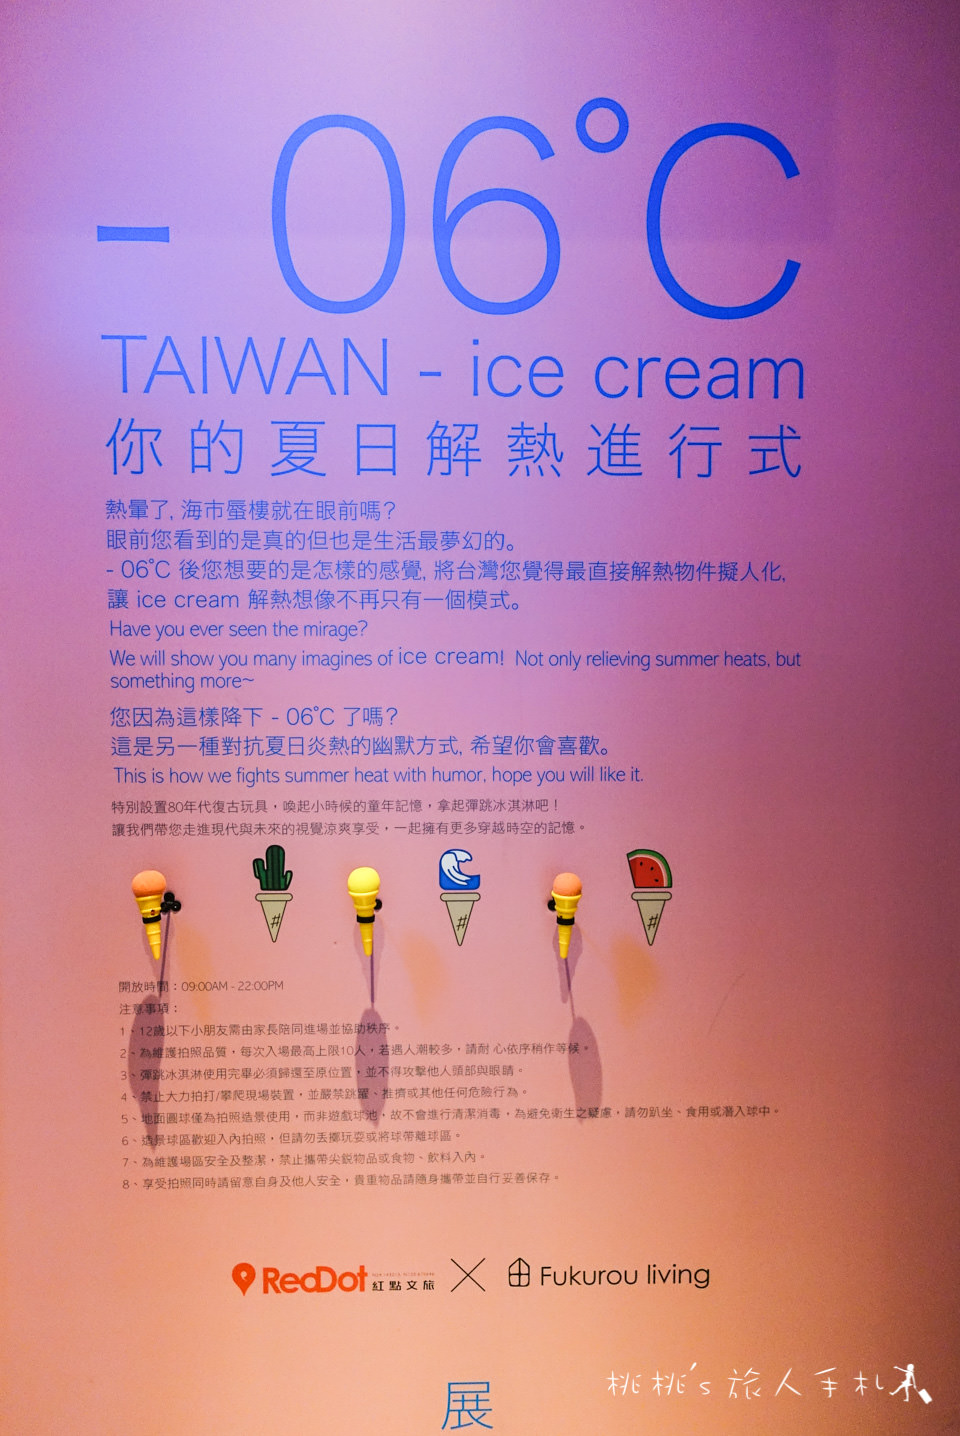 IG打卡景點》台中紅點文旅冰淇淋展整間都是粉紅球│-06℃ TAIWAN-ice cream你的夏日解渴進行式